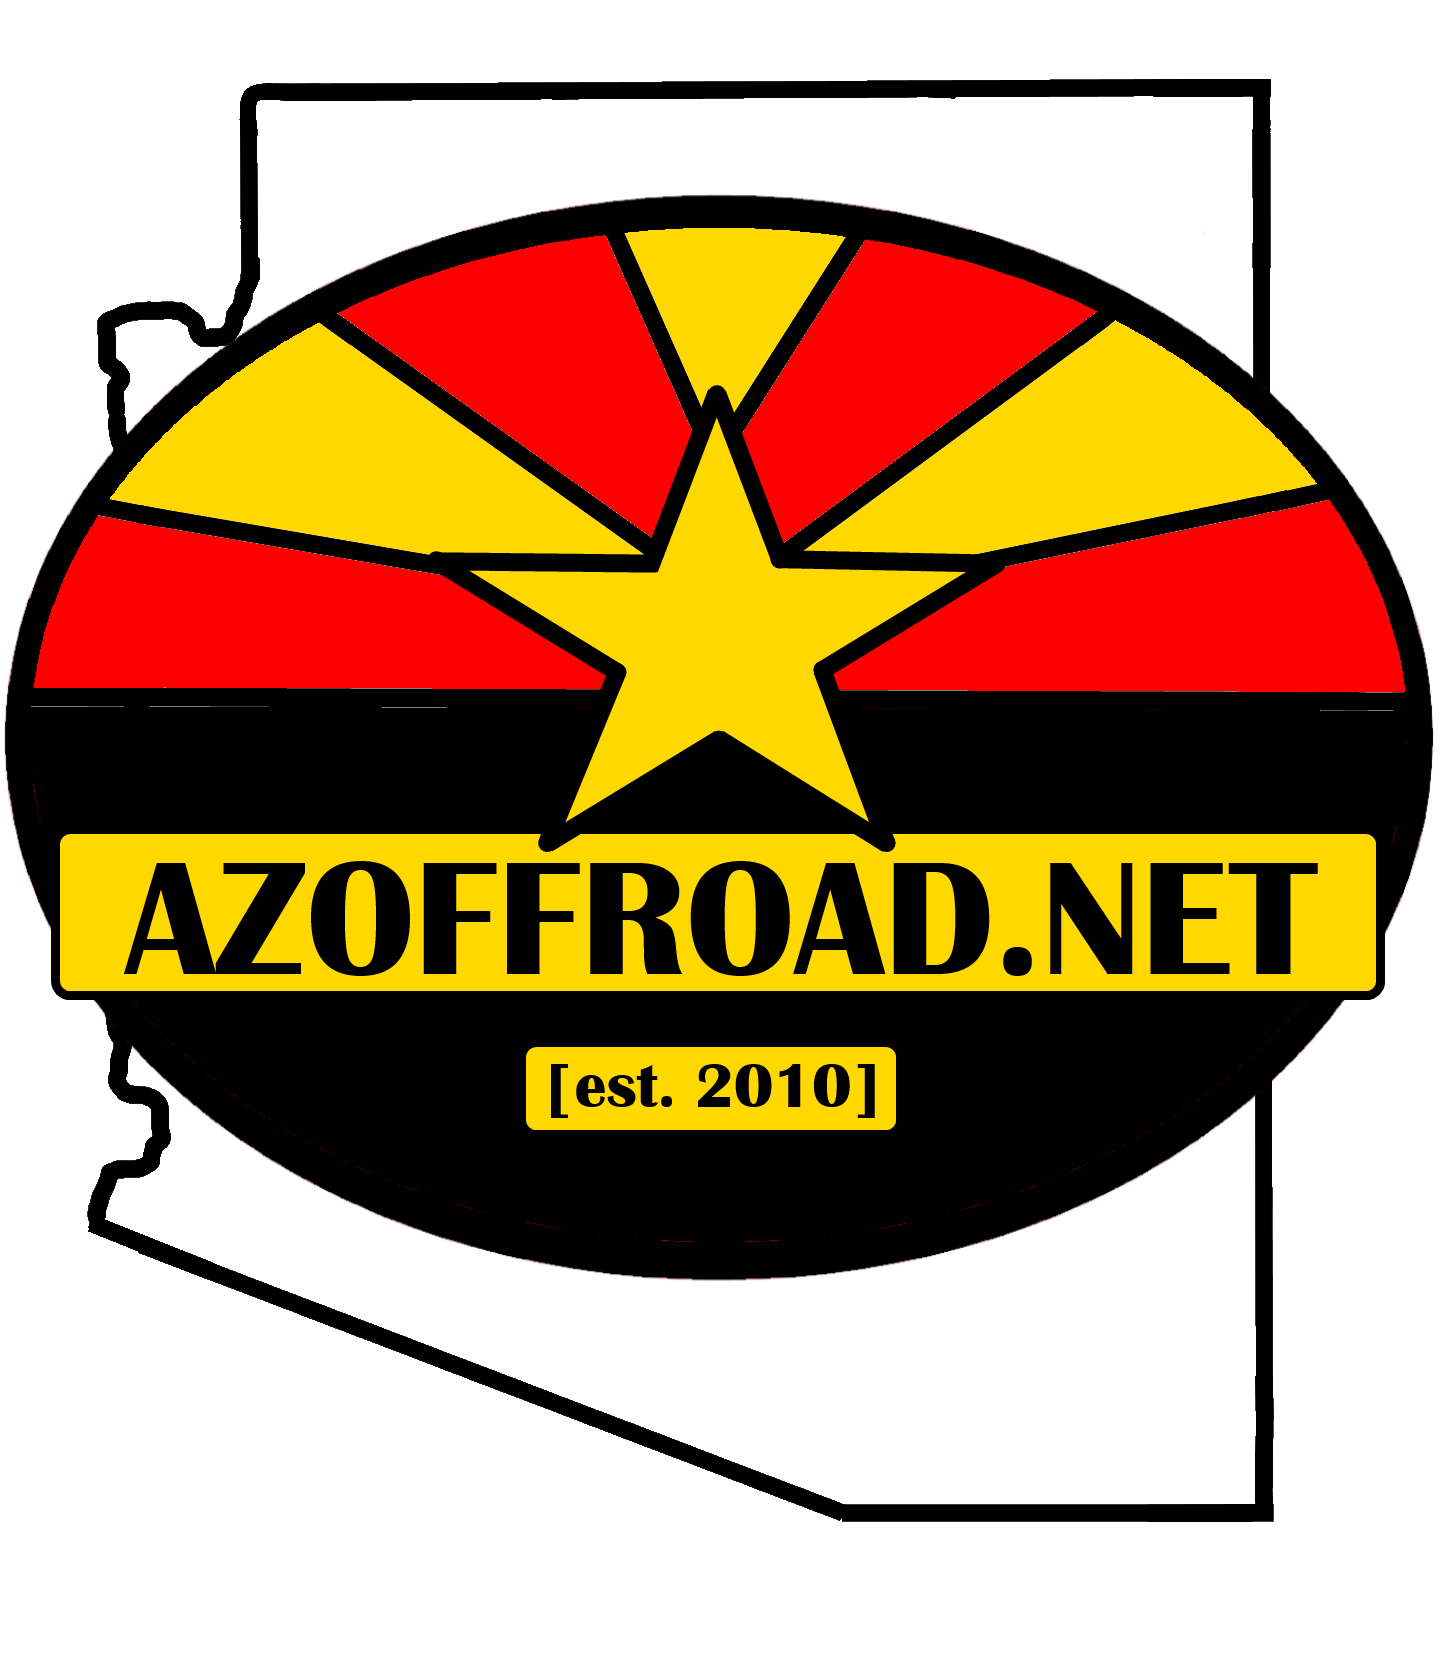 AZOFFROAD.NET